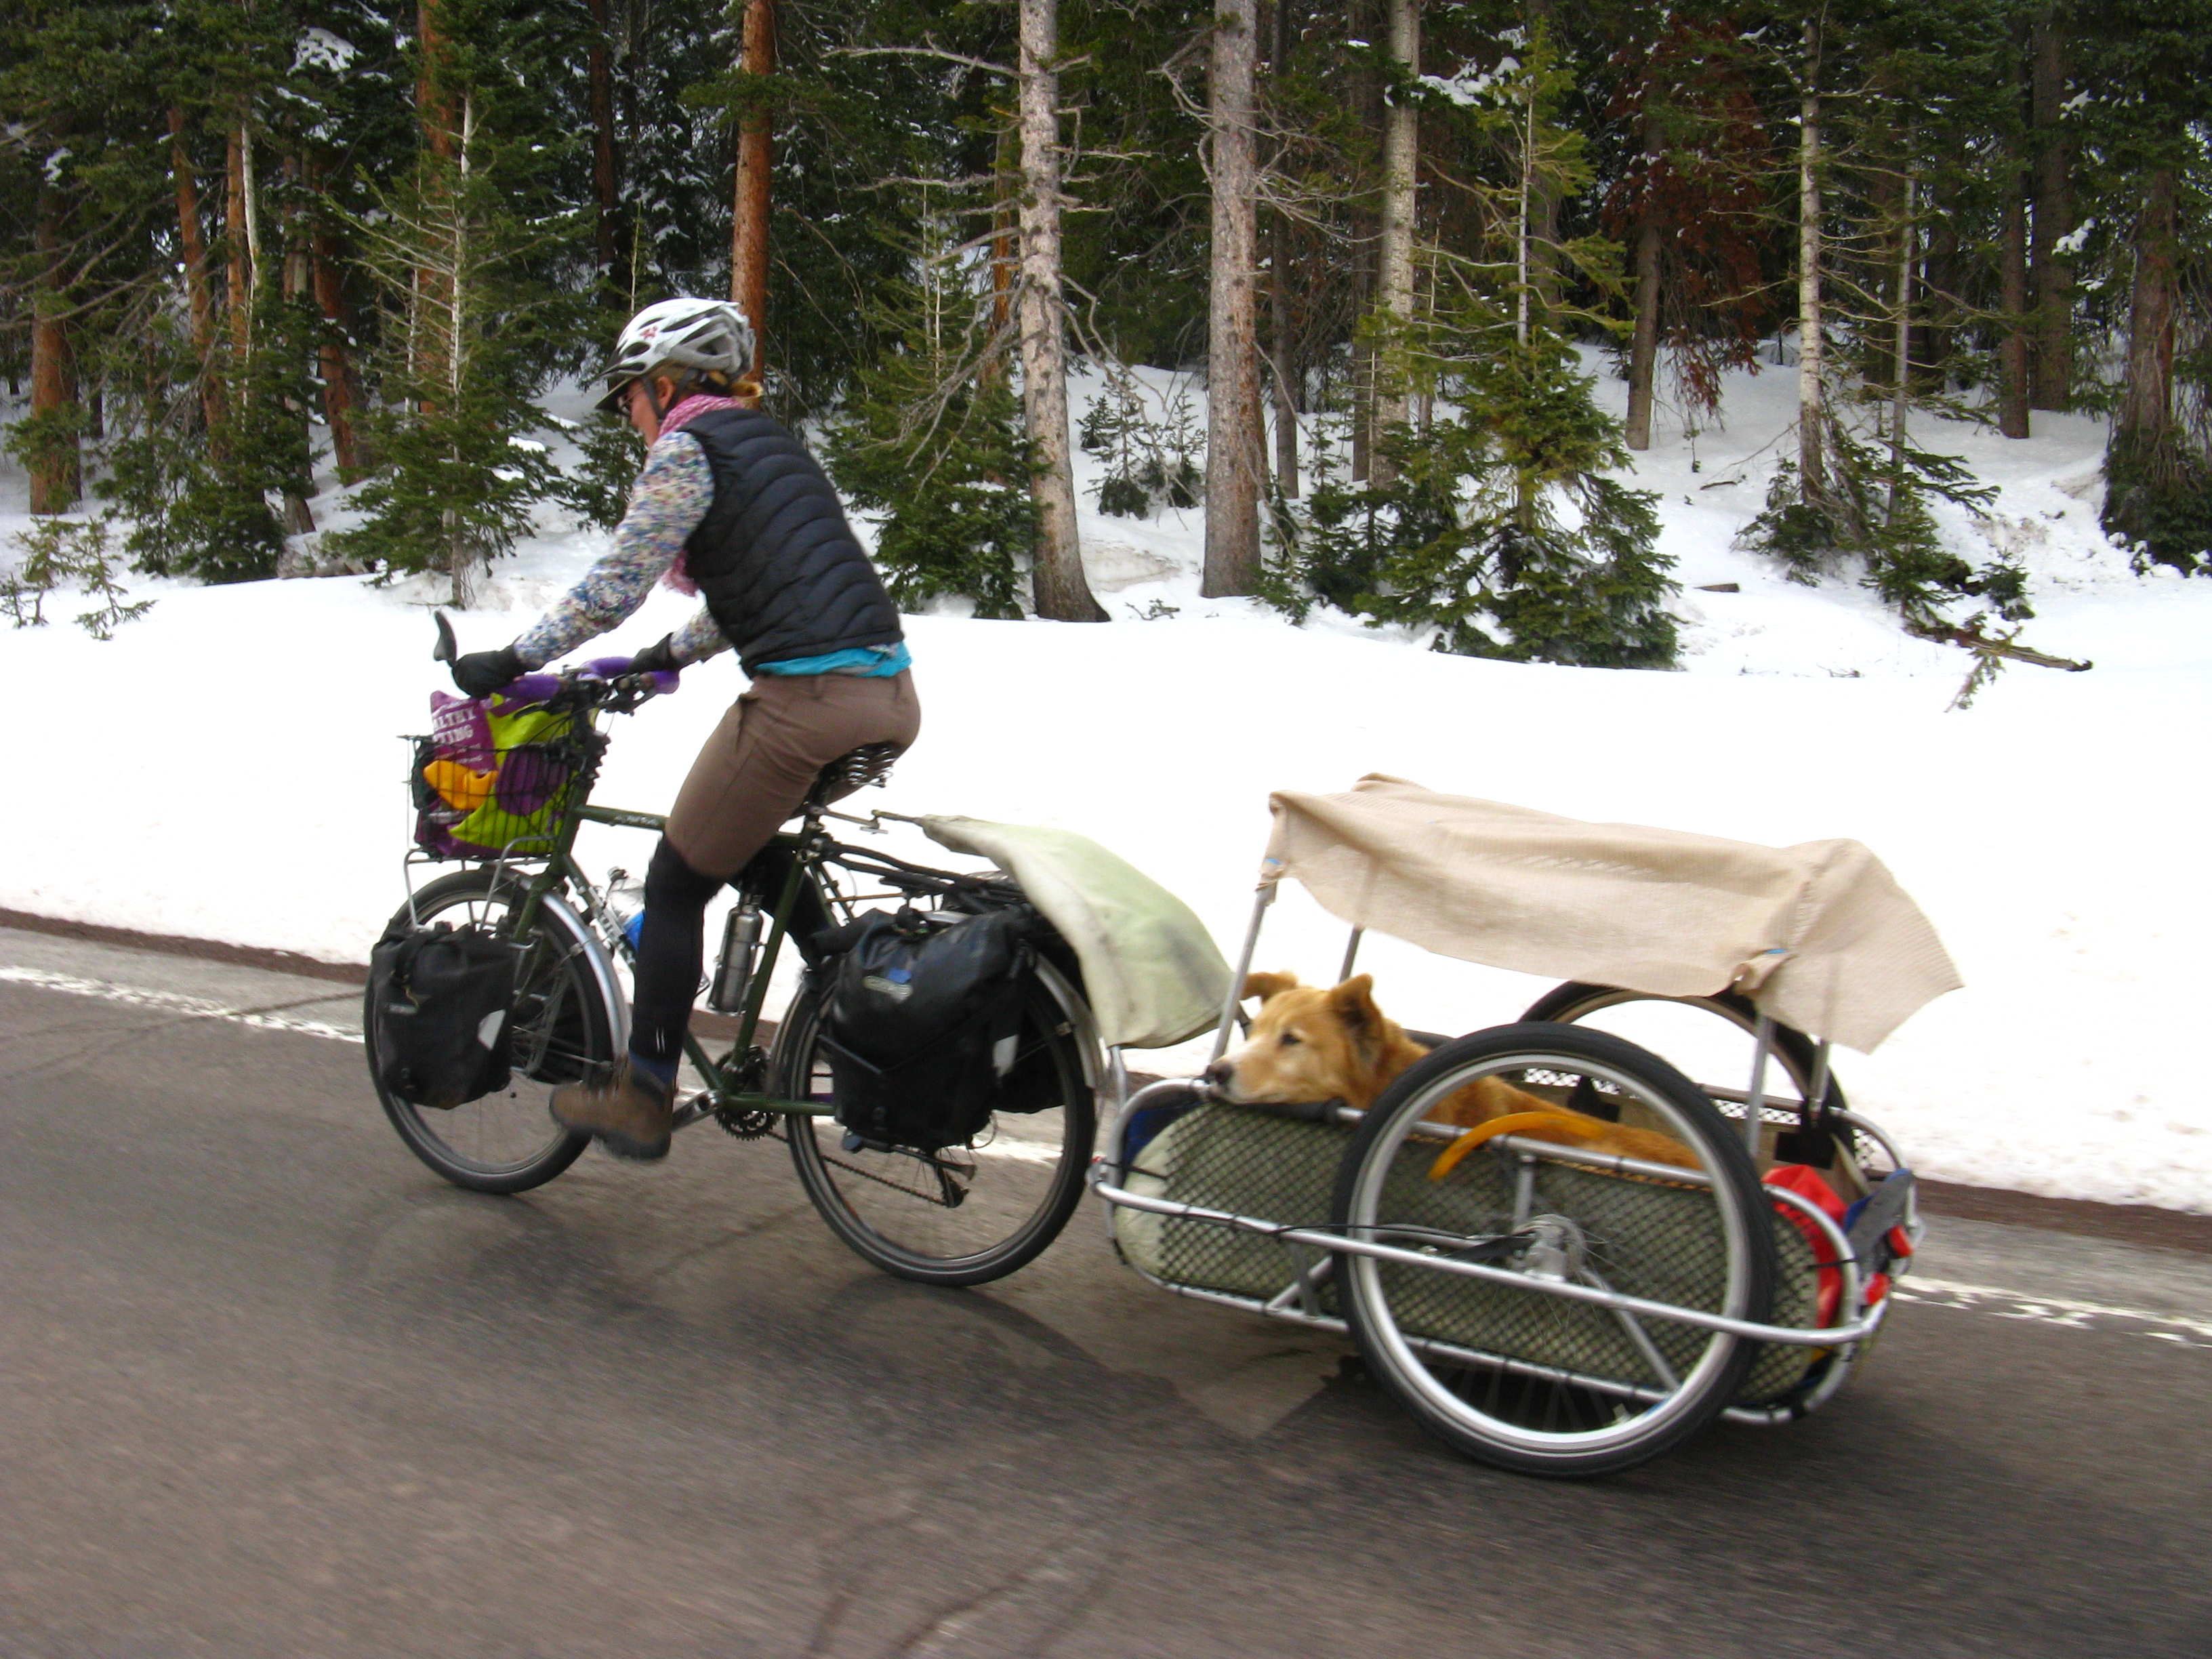 dog carriage for bike